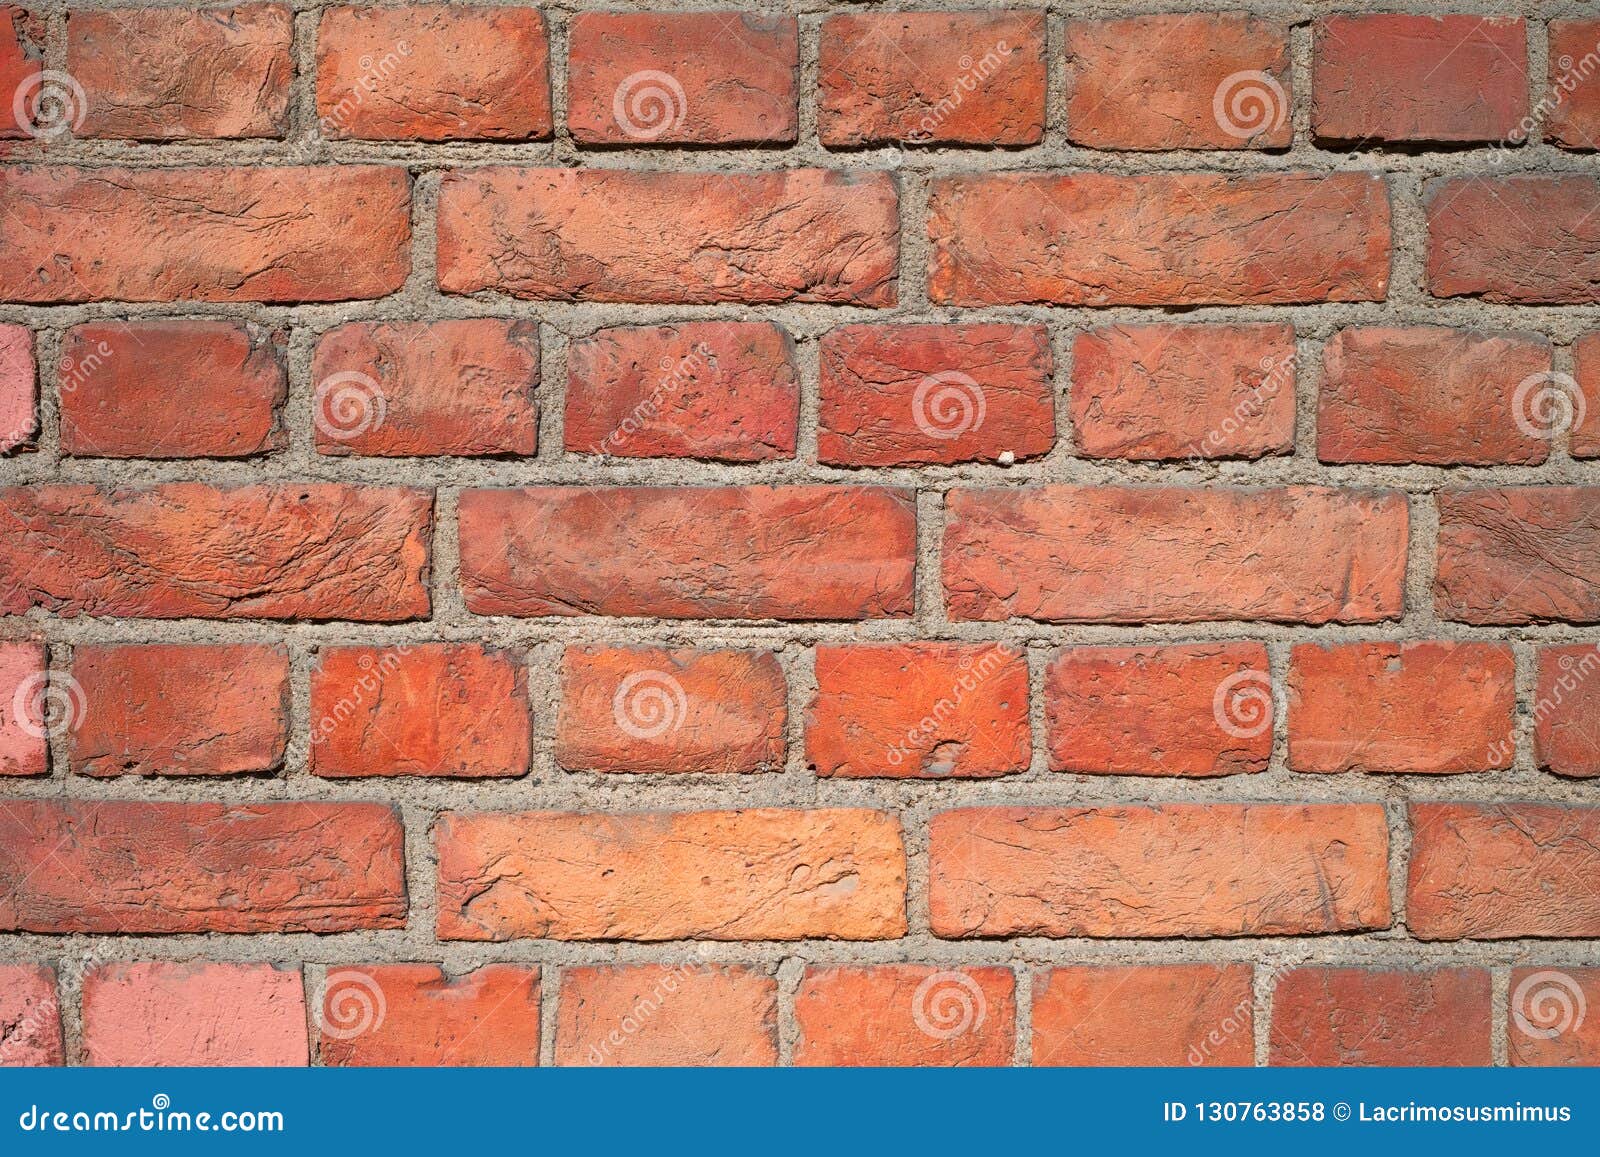 red brick